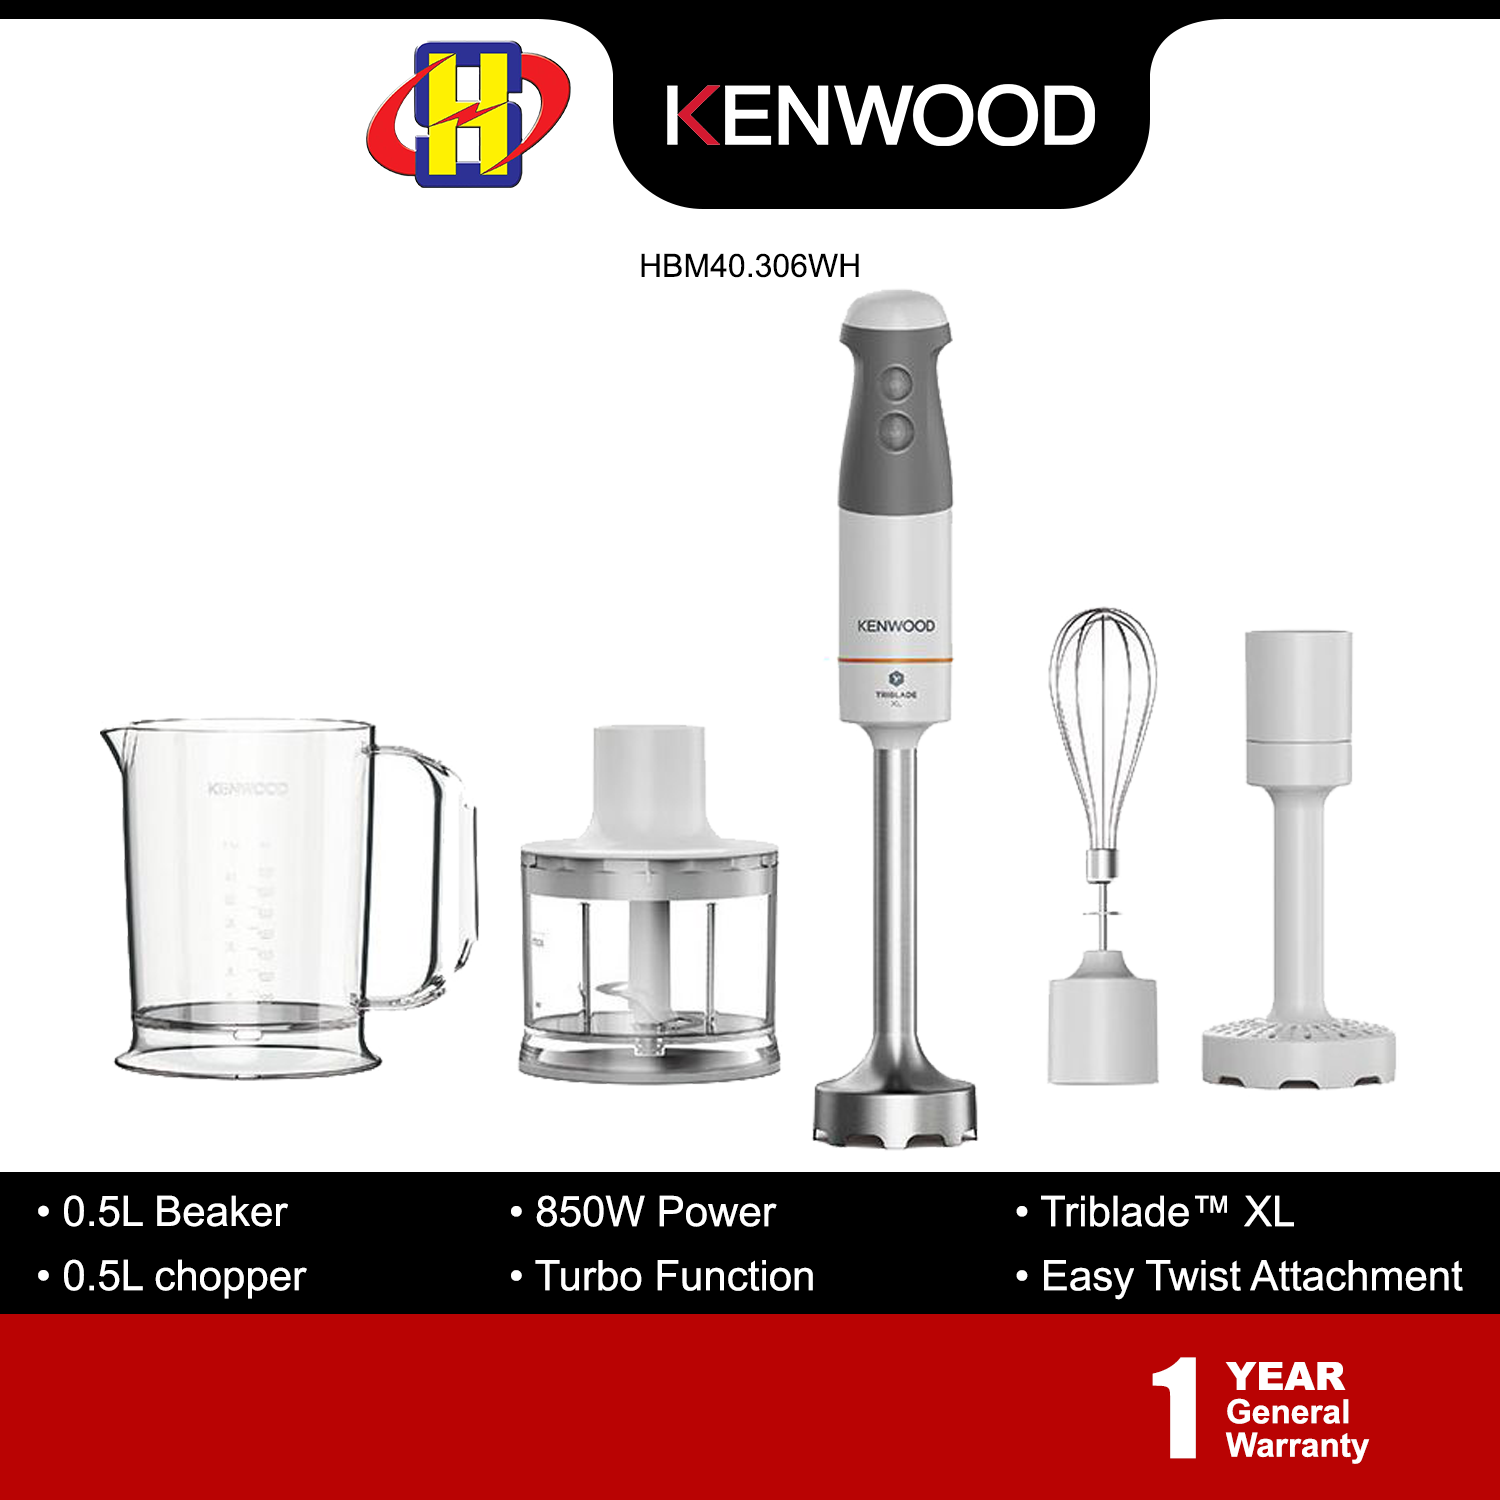 Kenwood Triblade XL Hand Blender HBM40.306WH 850W